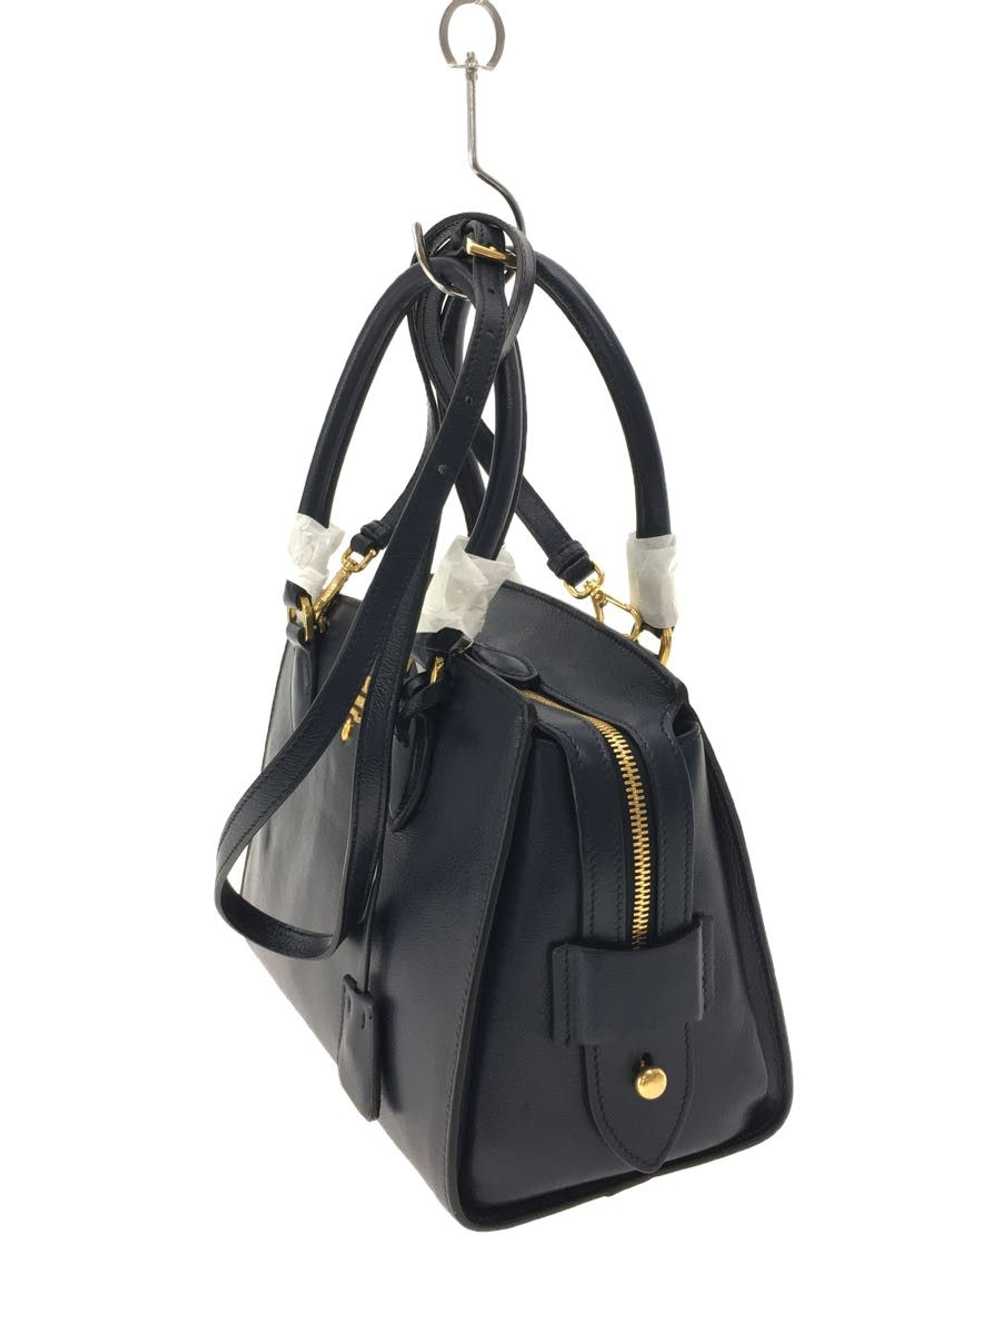 Prada Prada Shoulder Bag Leather Handbag Navy - image 3